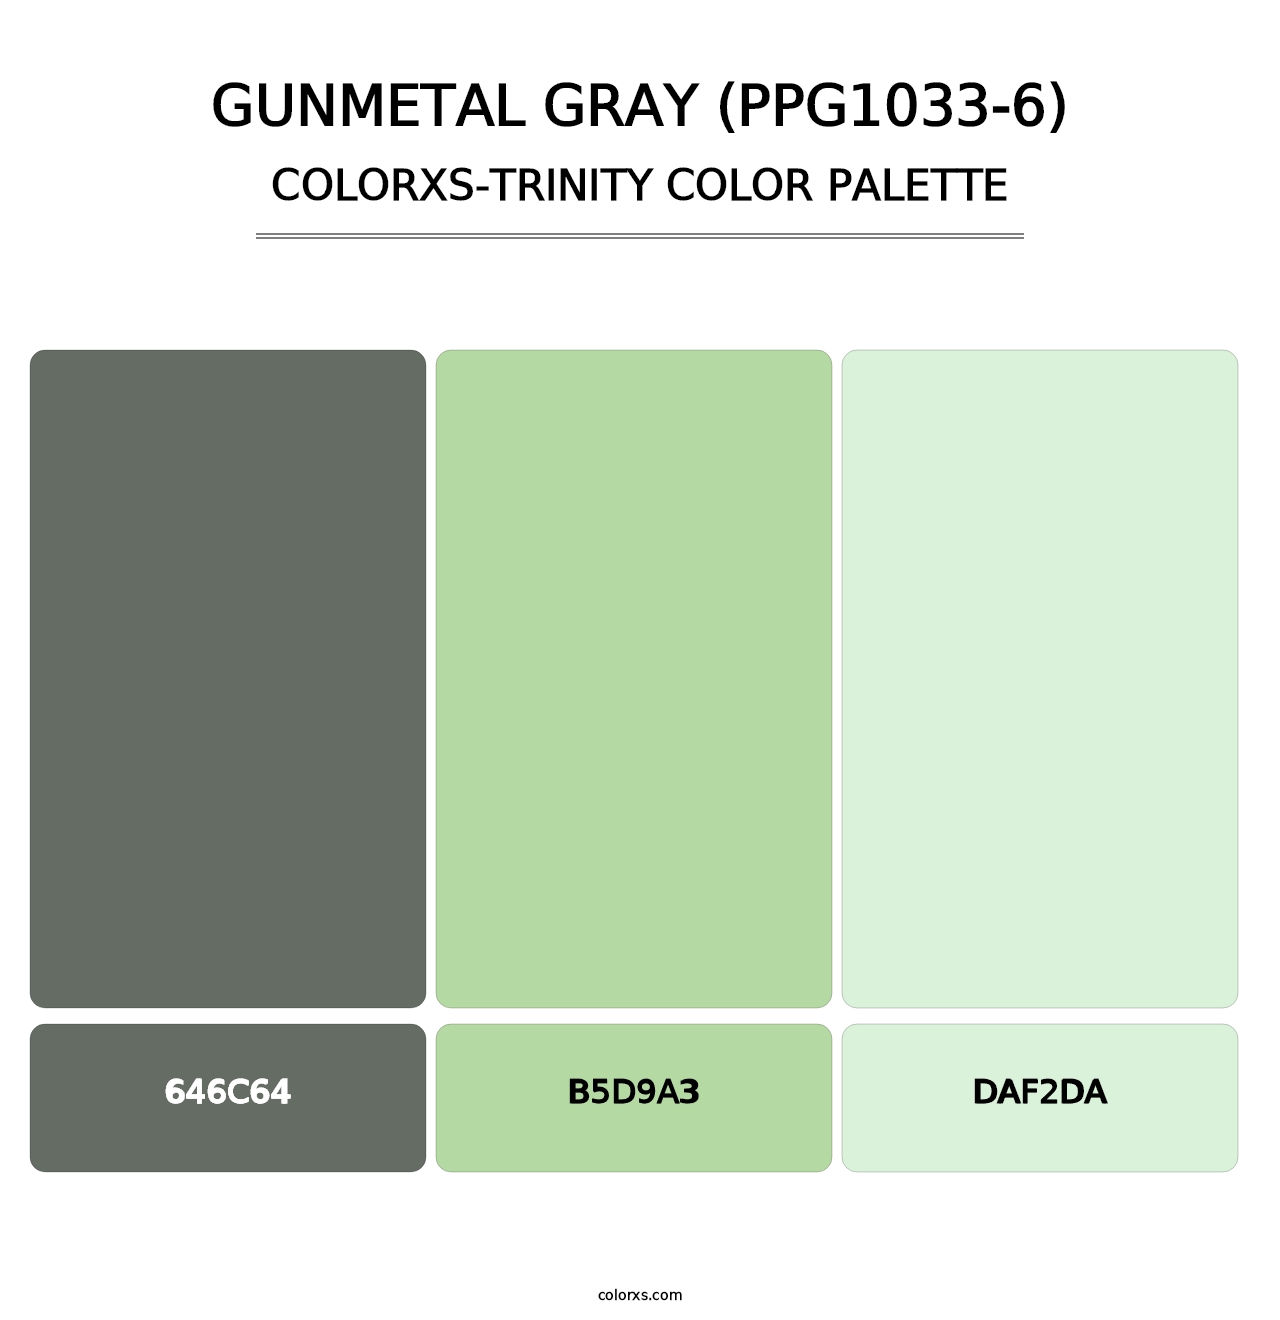 Gunmetal Gray (PPG1033-6) - Colorxs Trinity Palette